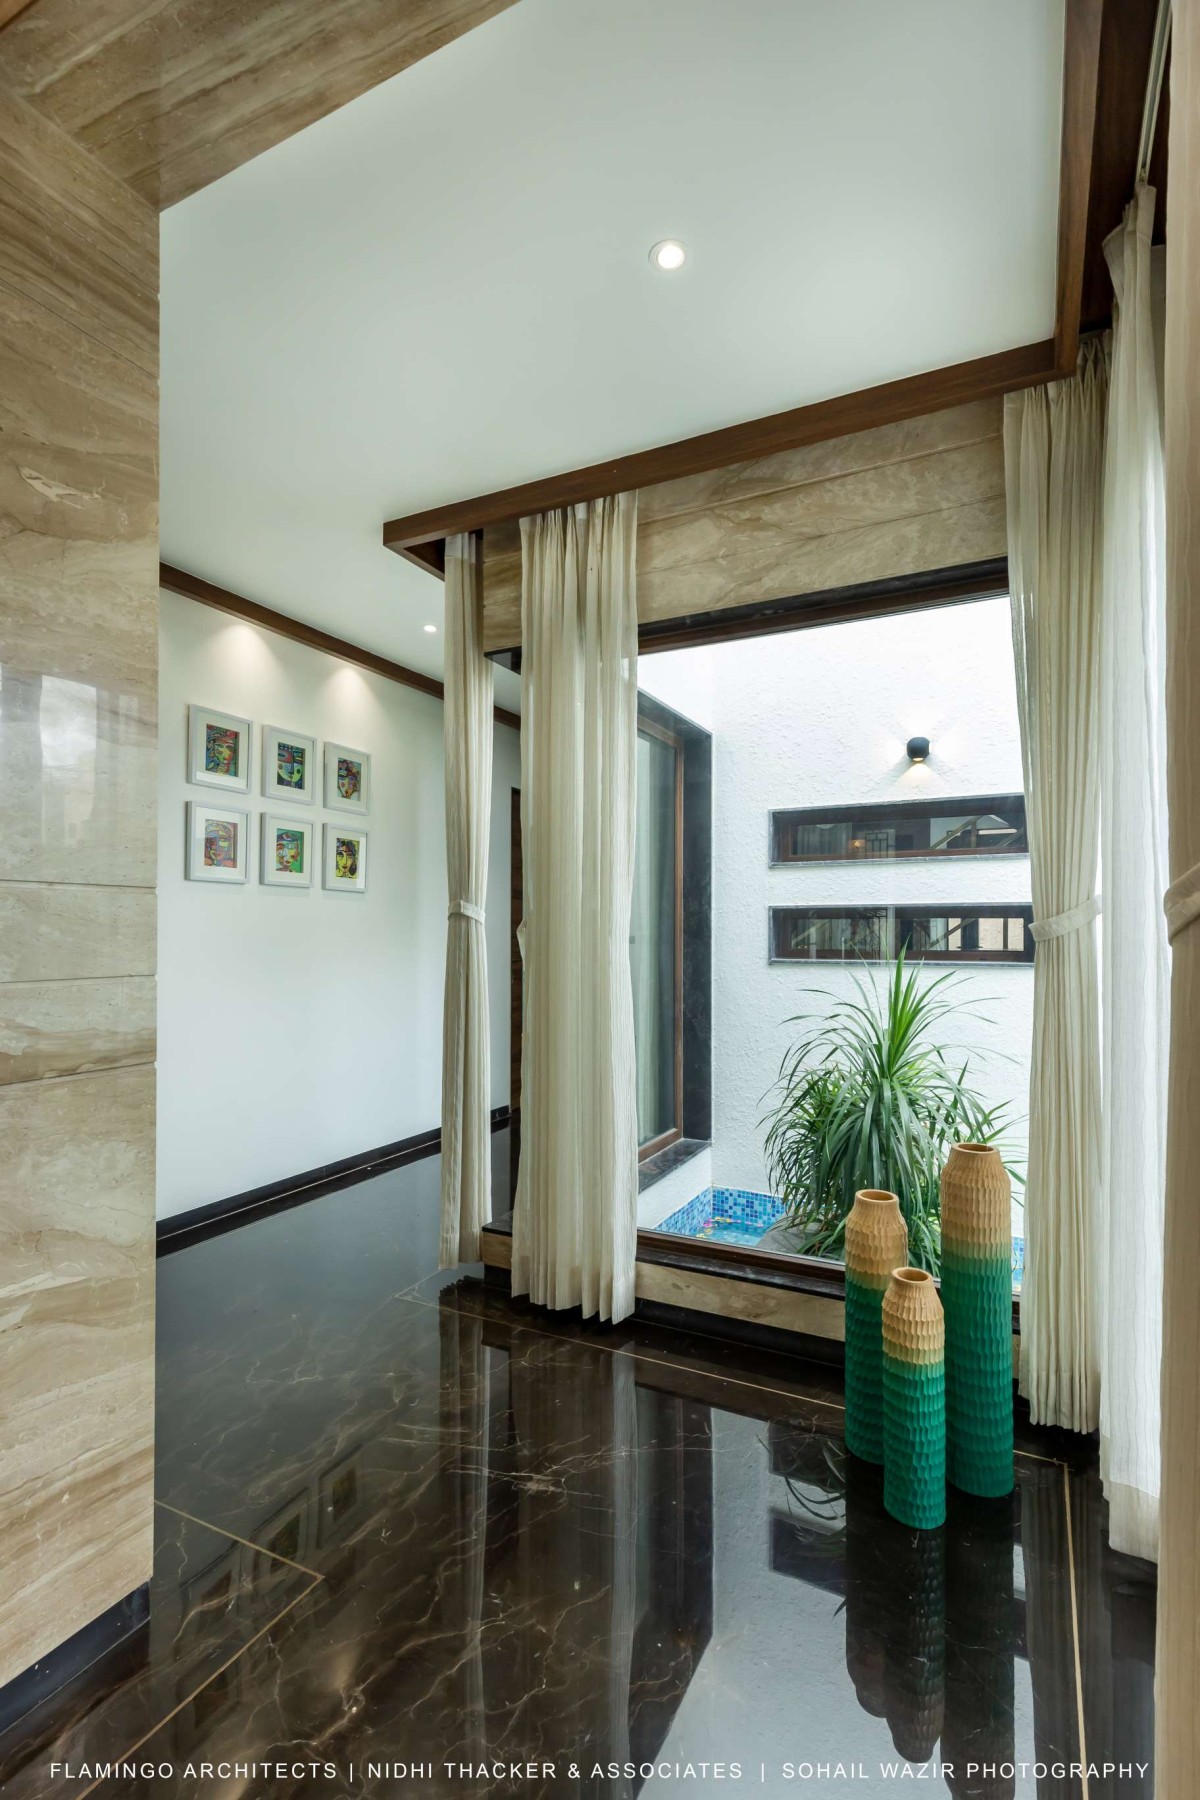 Lobby of Pujara House by Flamingo Architects + Nidhi Thacker and Associates